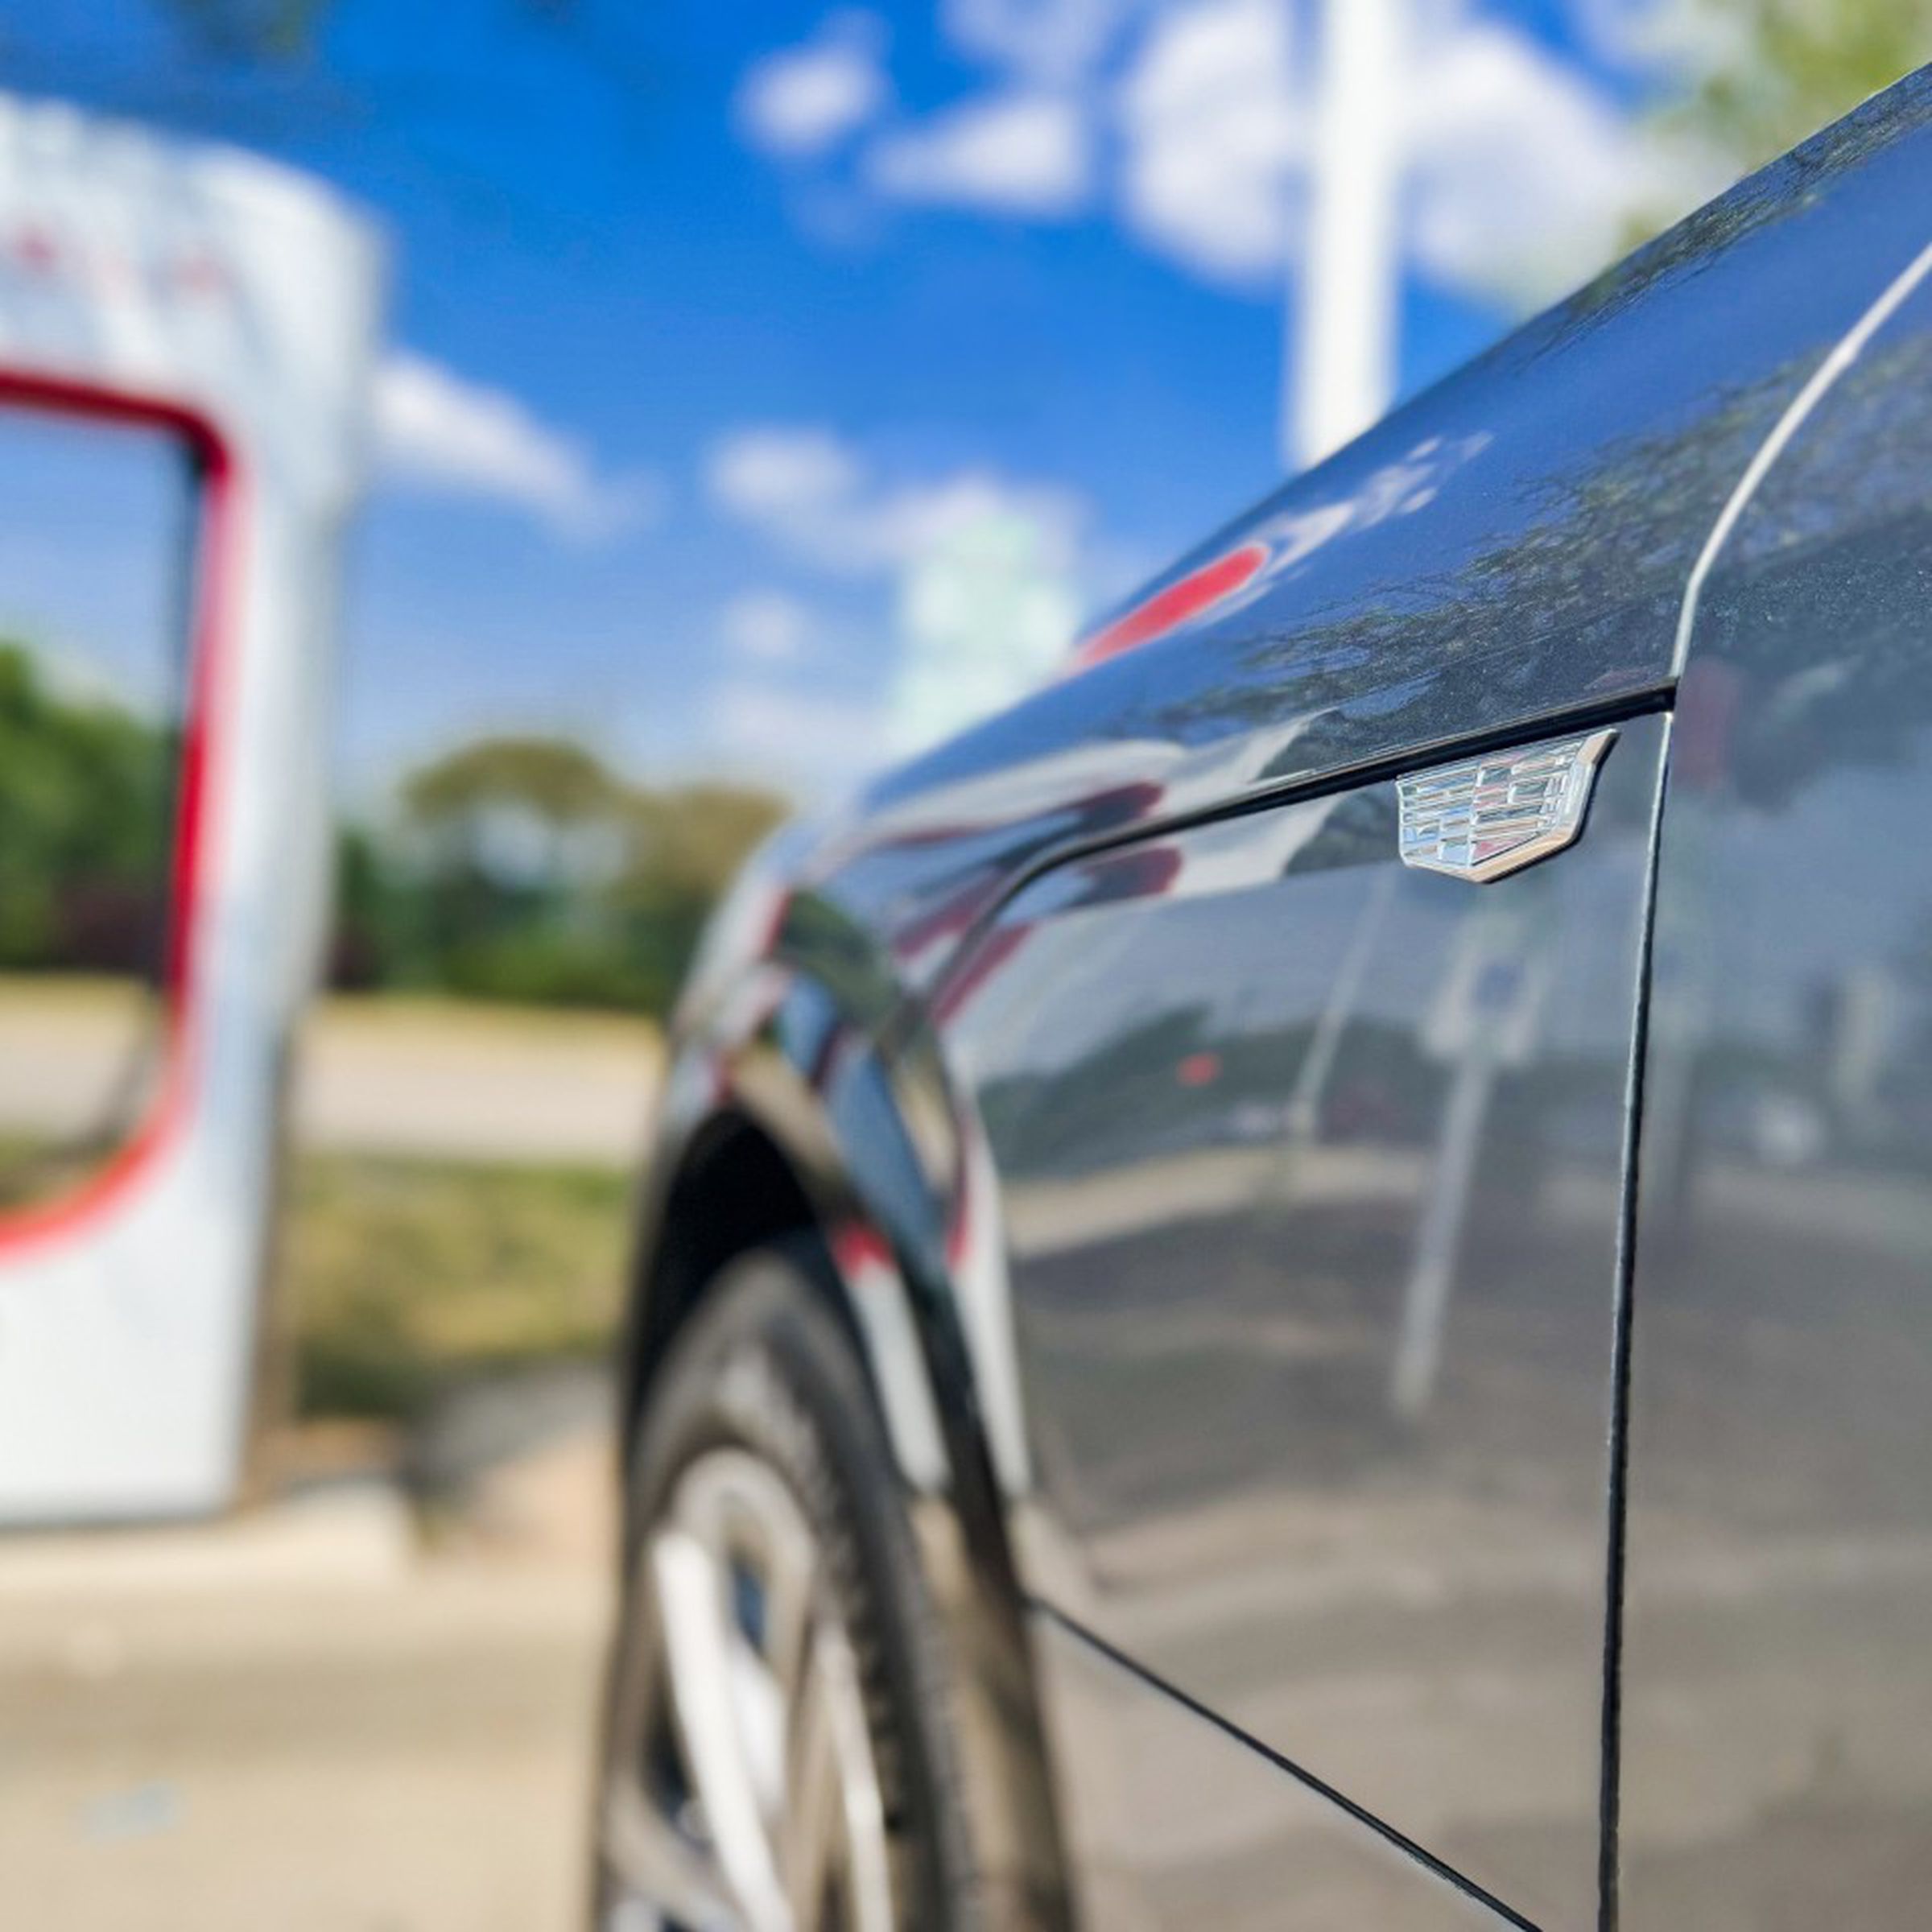 GM using a Tesla Supercharger